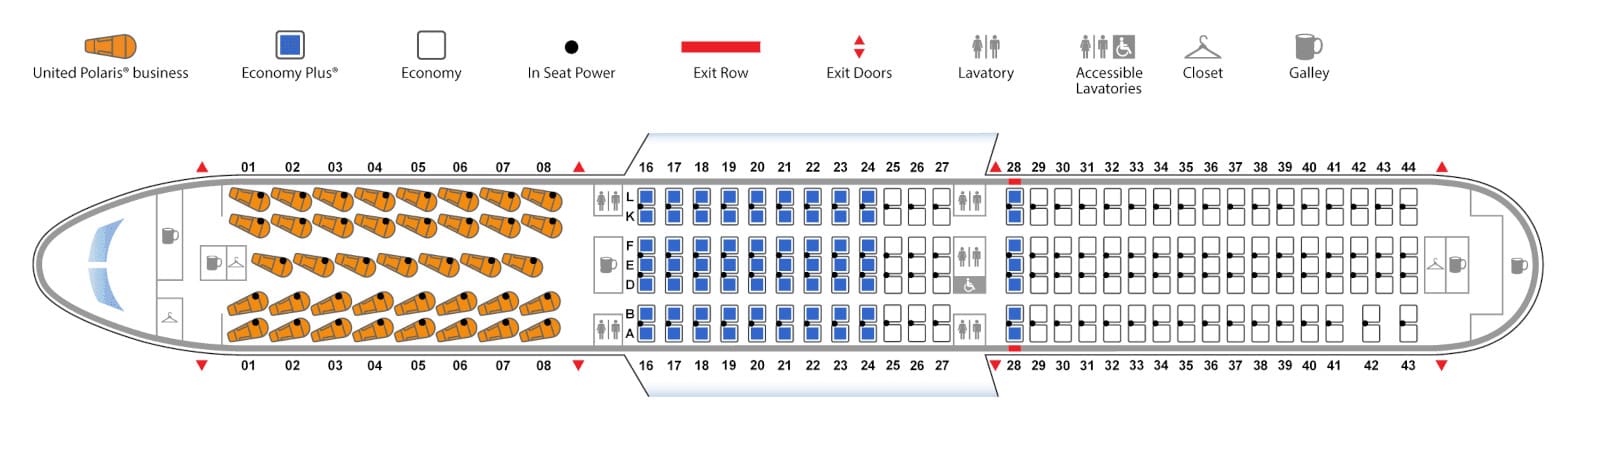 United 767-400ER Seat Map